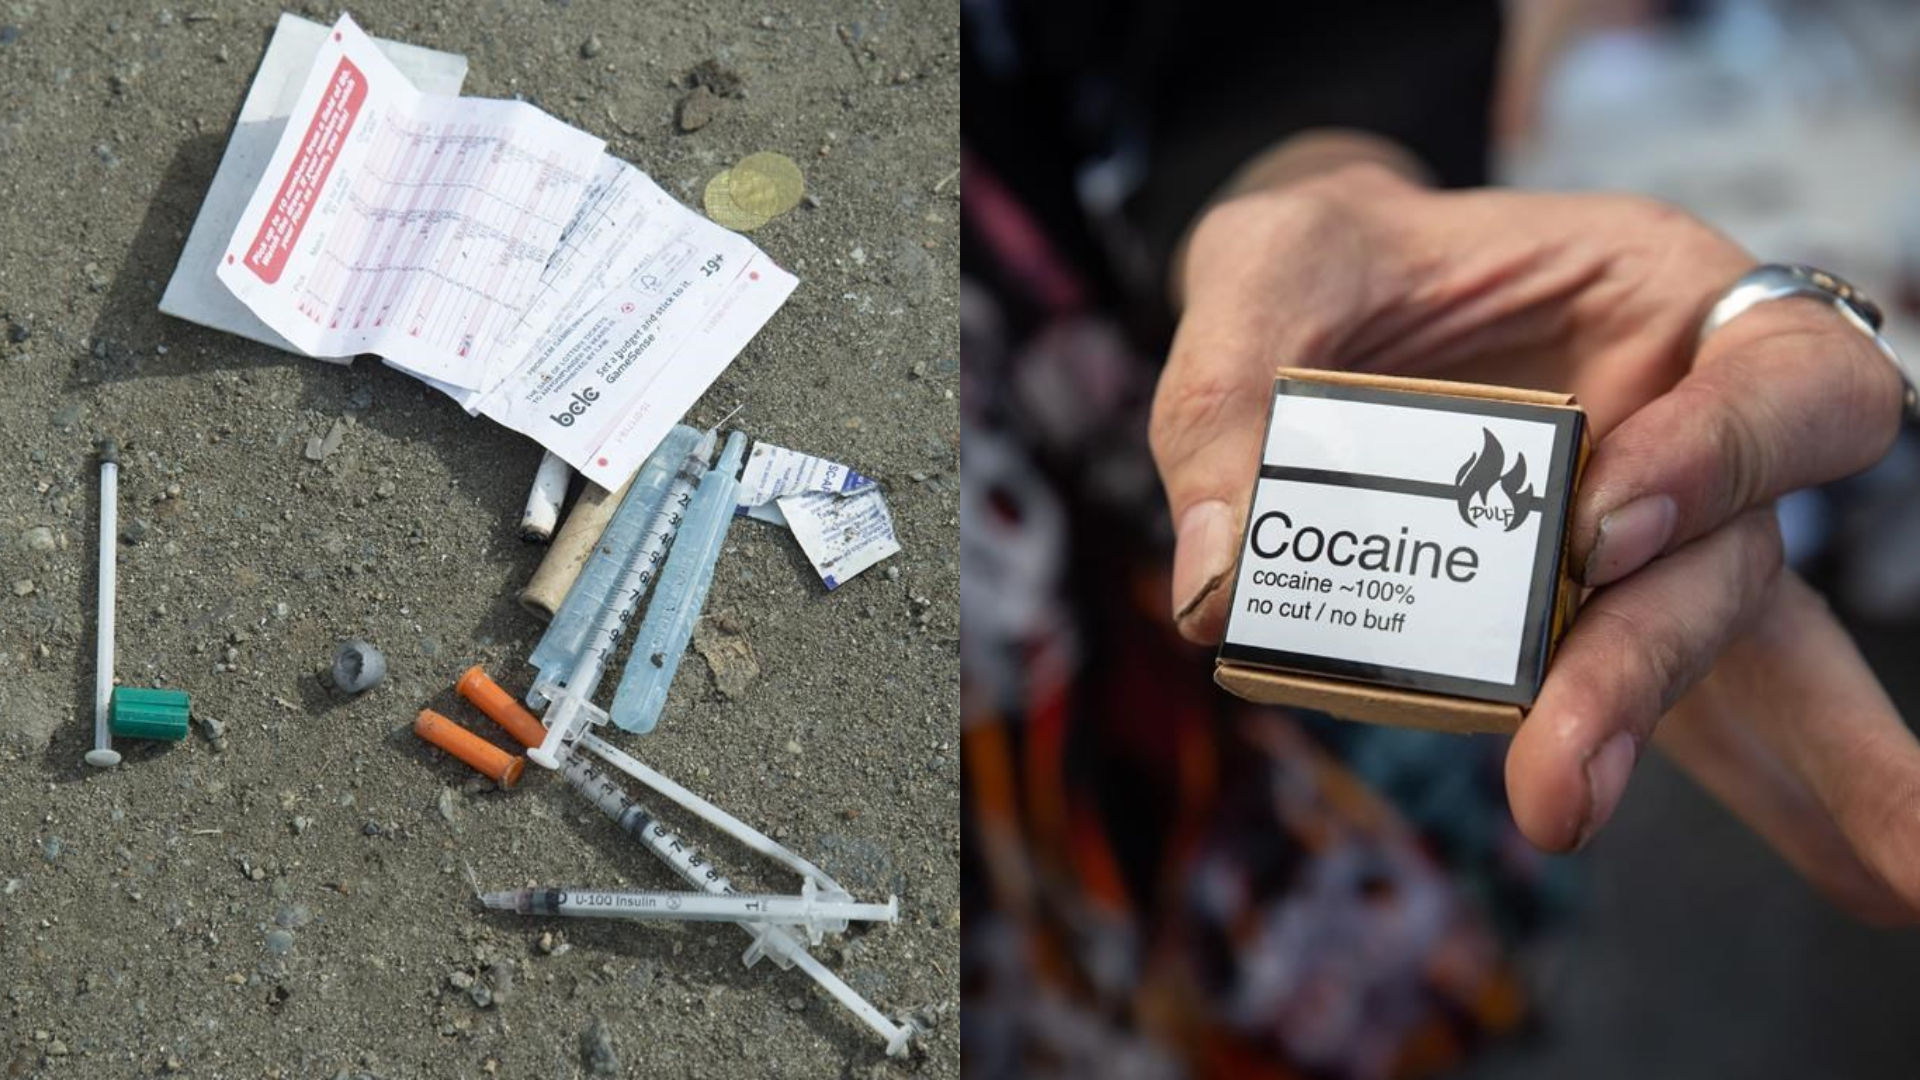 Federal Government approves B.C. amendment to recriminalize public drug use